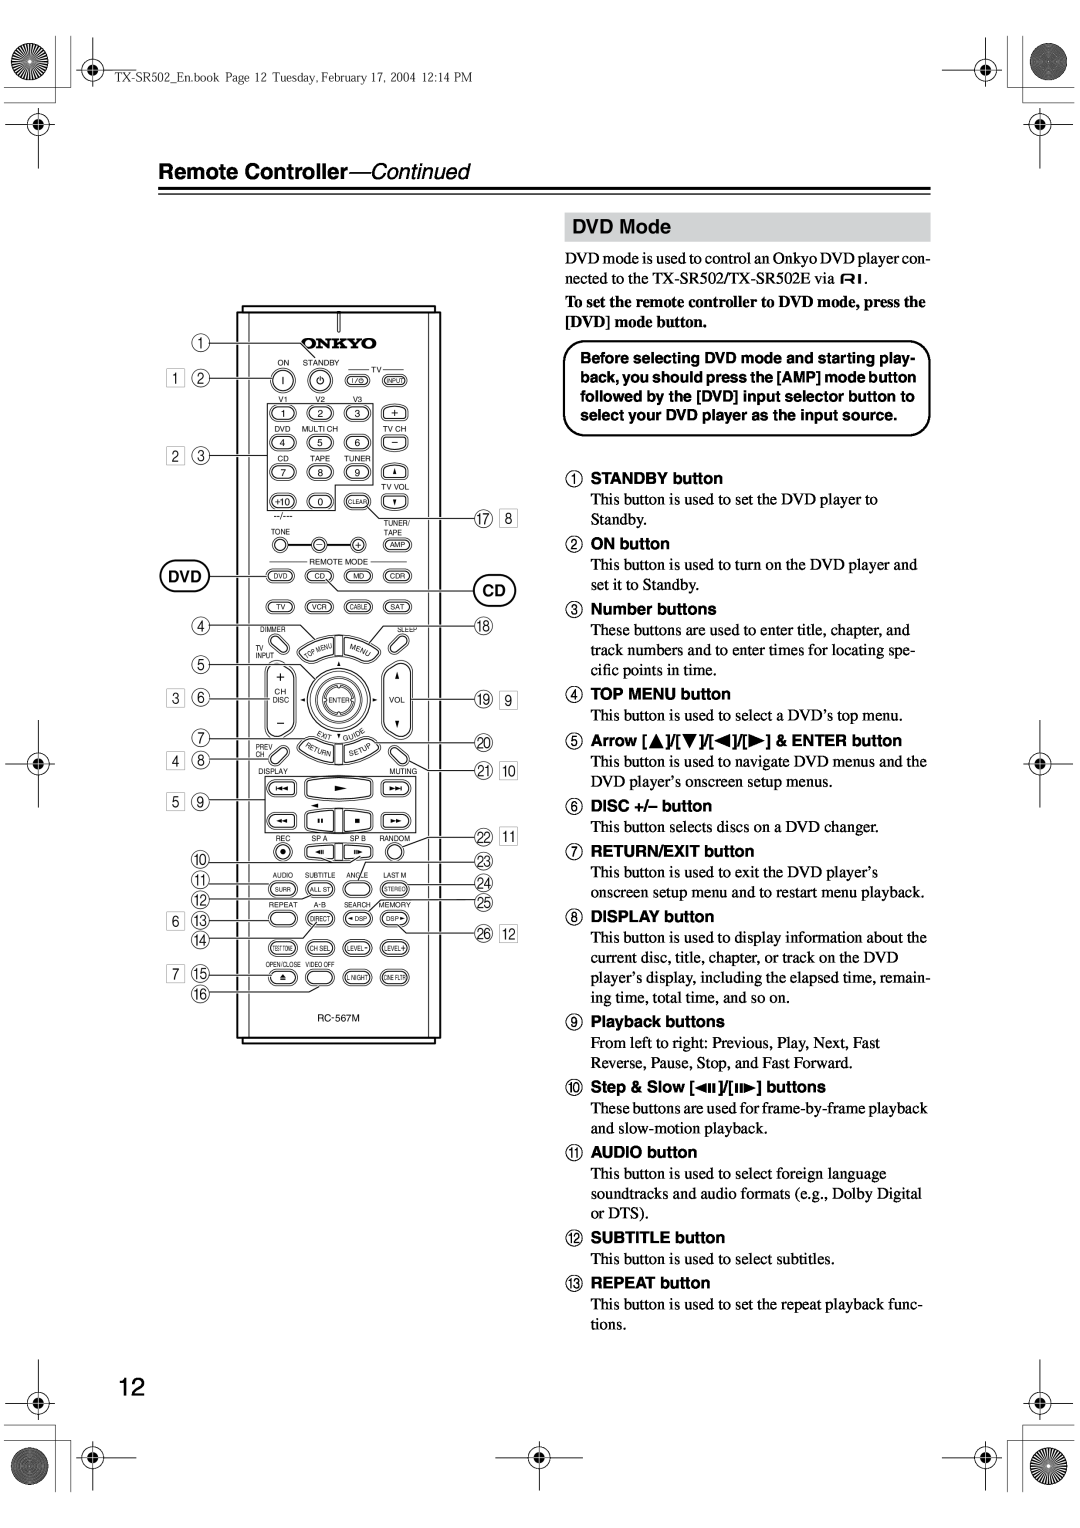 Onkyo TX-SR502E instruction manual DVD Mode, Remote Controller-Continued 